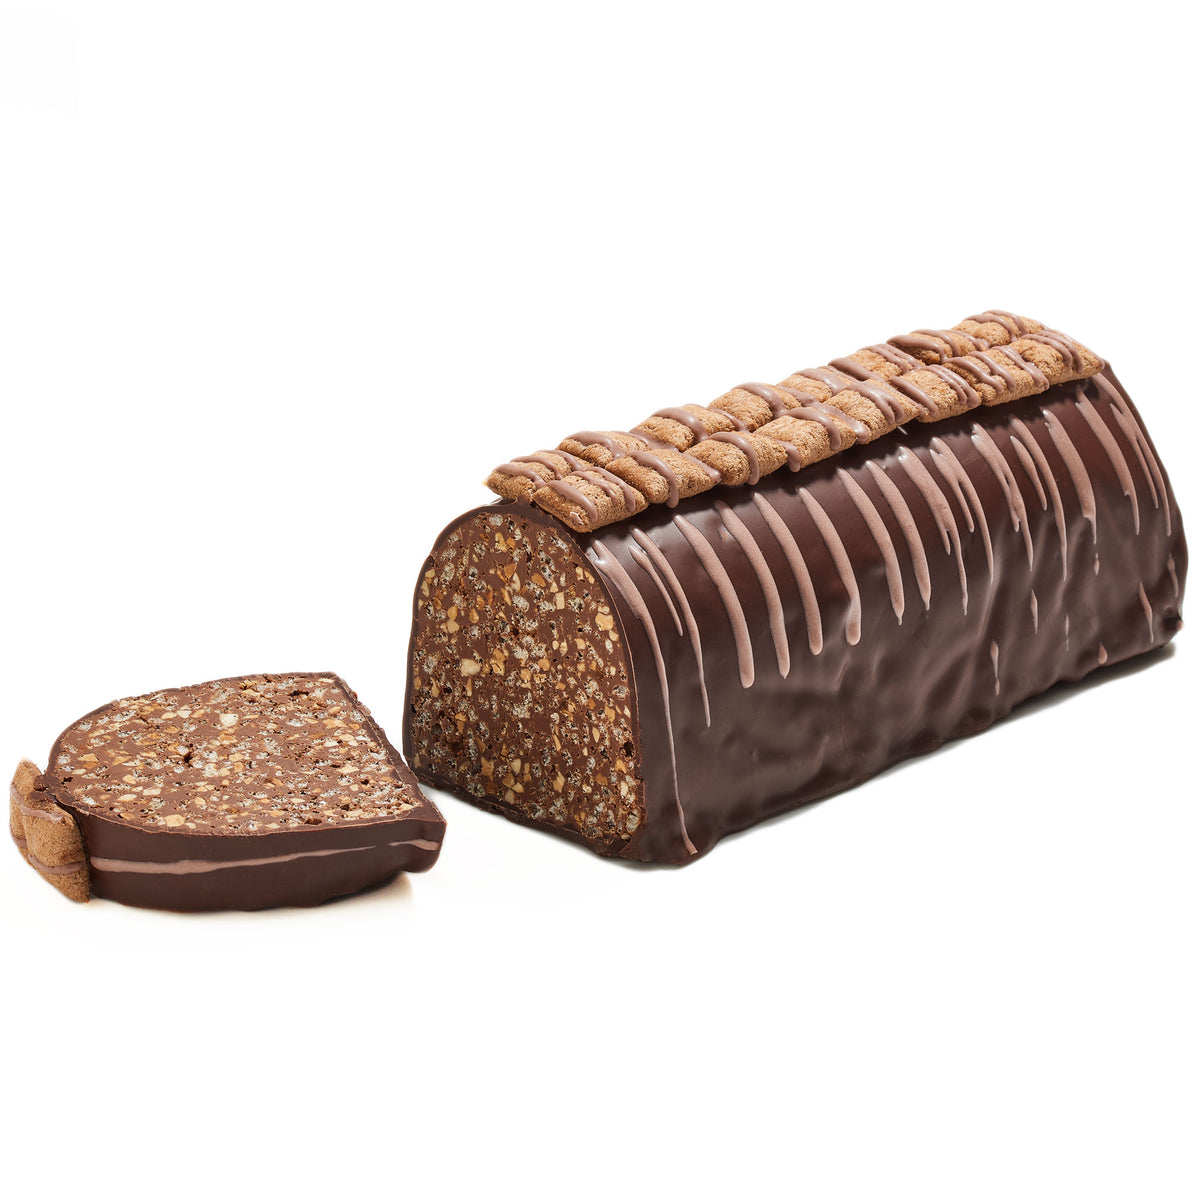 Crispy Chocolate Log In Gift Box  Fames Chocolate